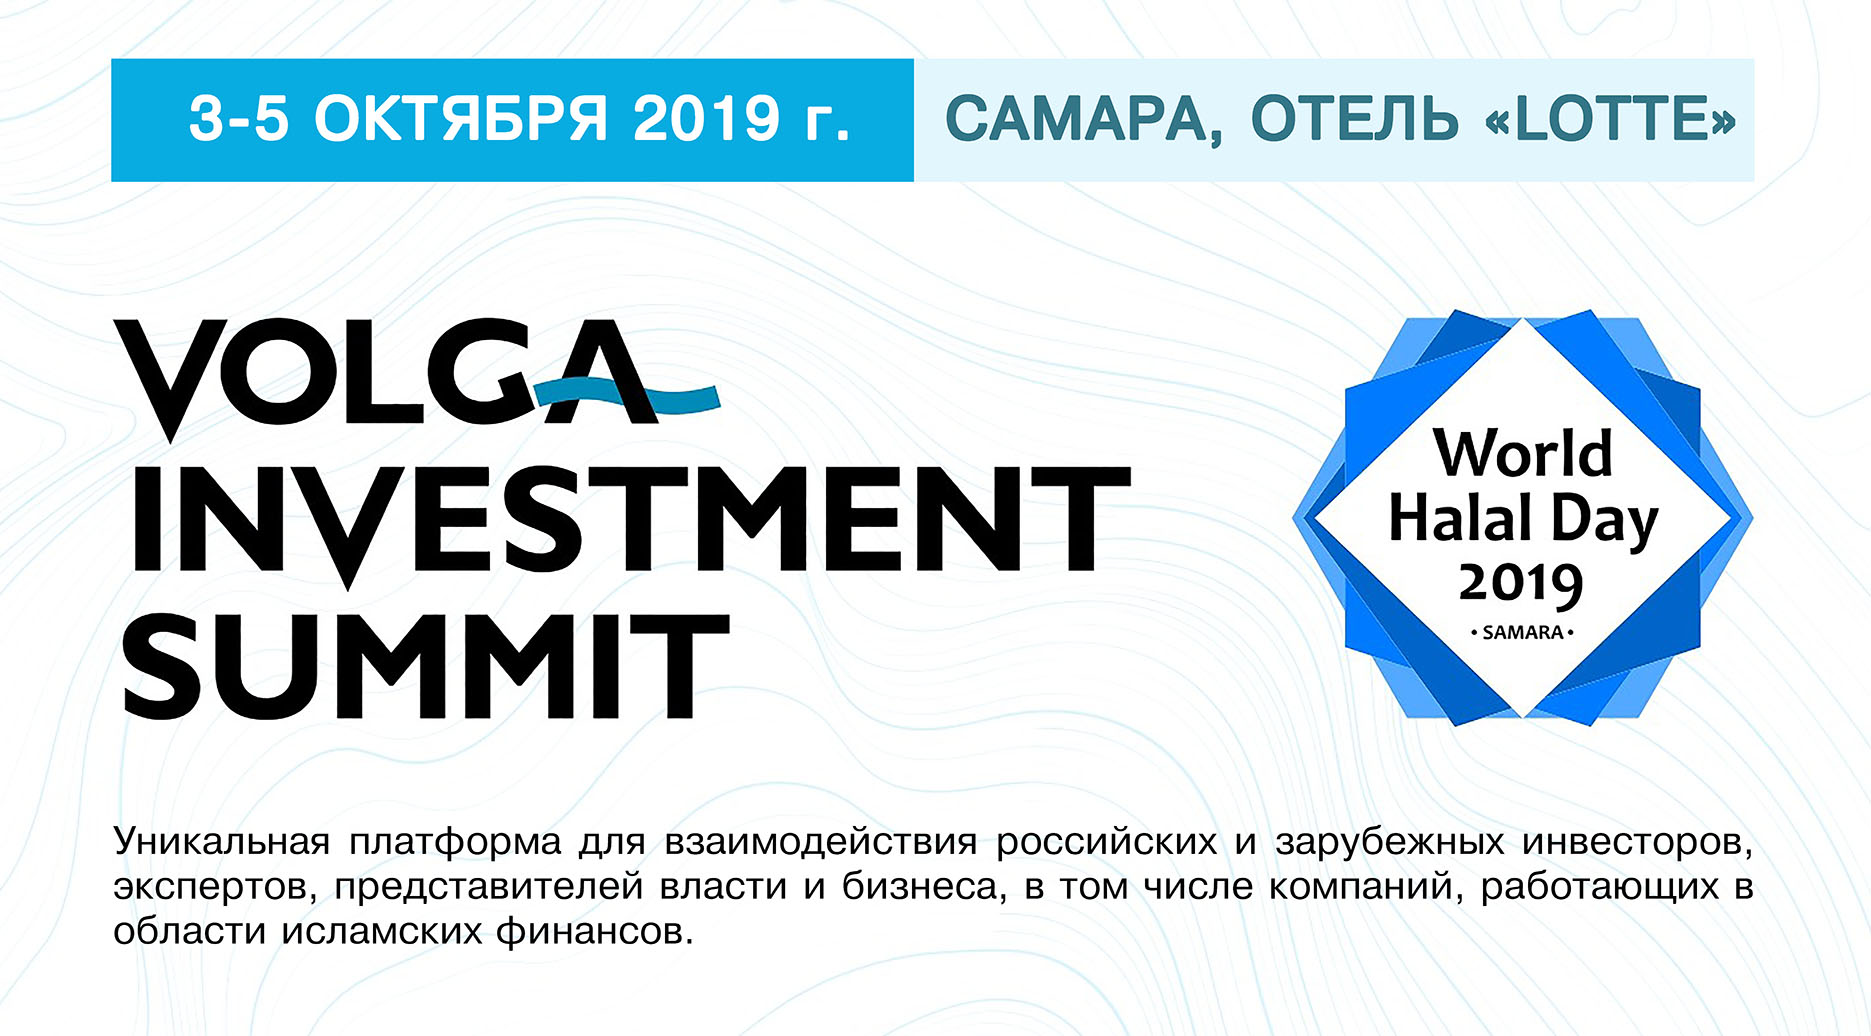 volga-investment-summit-world-halal-day